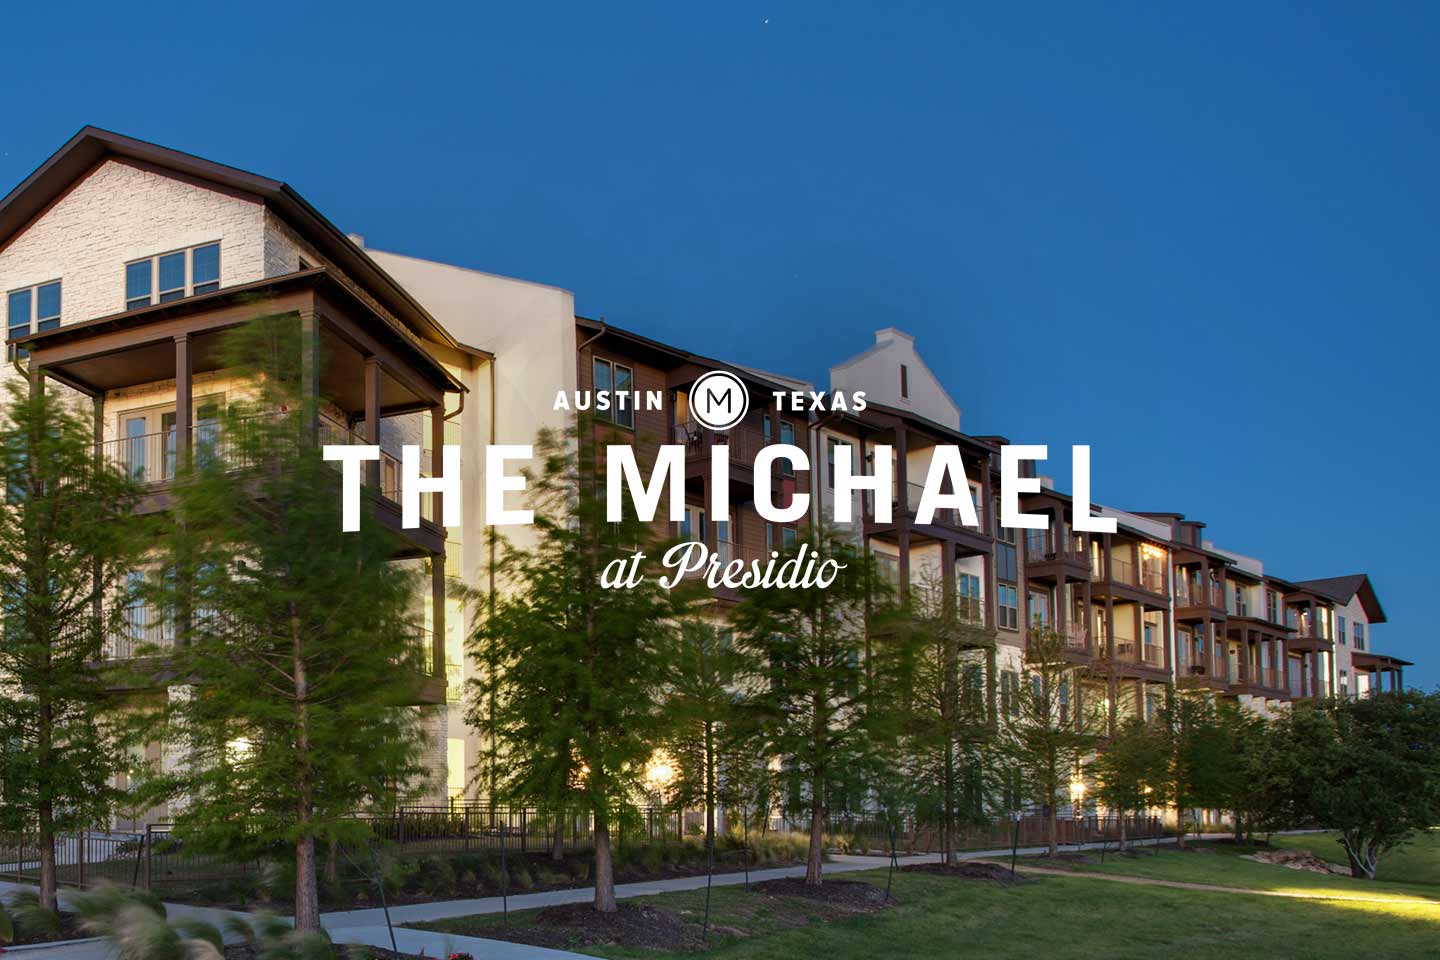 The Michael at Presidio Austin Texas Apartment Community